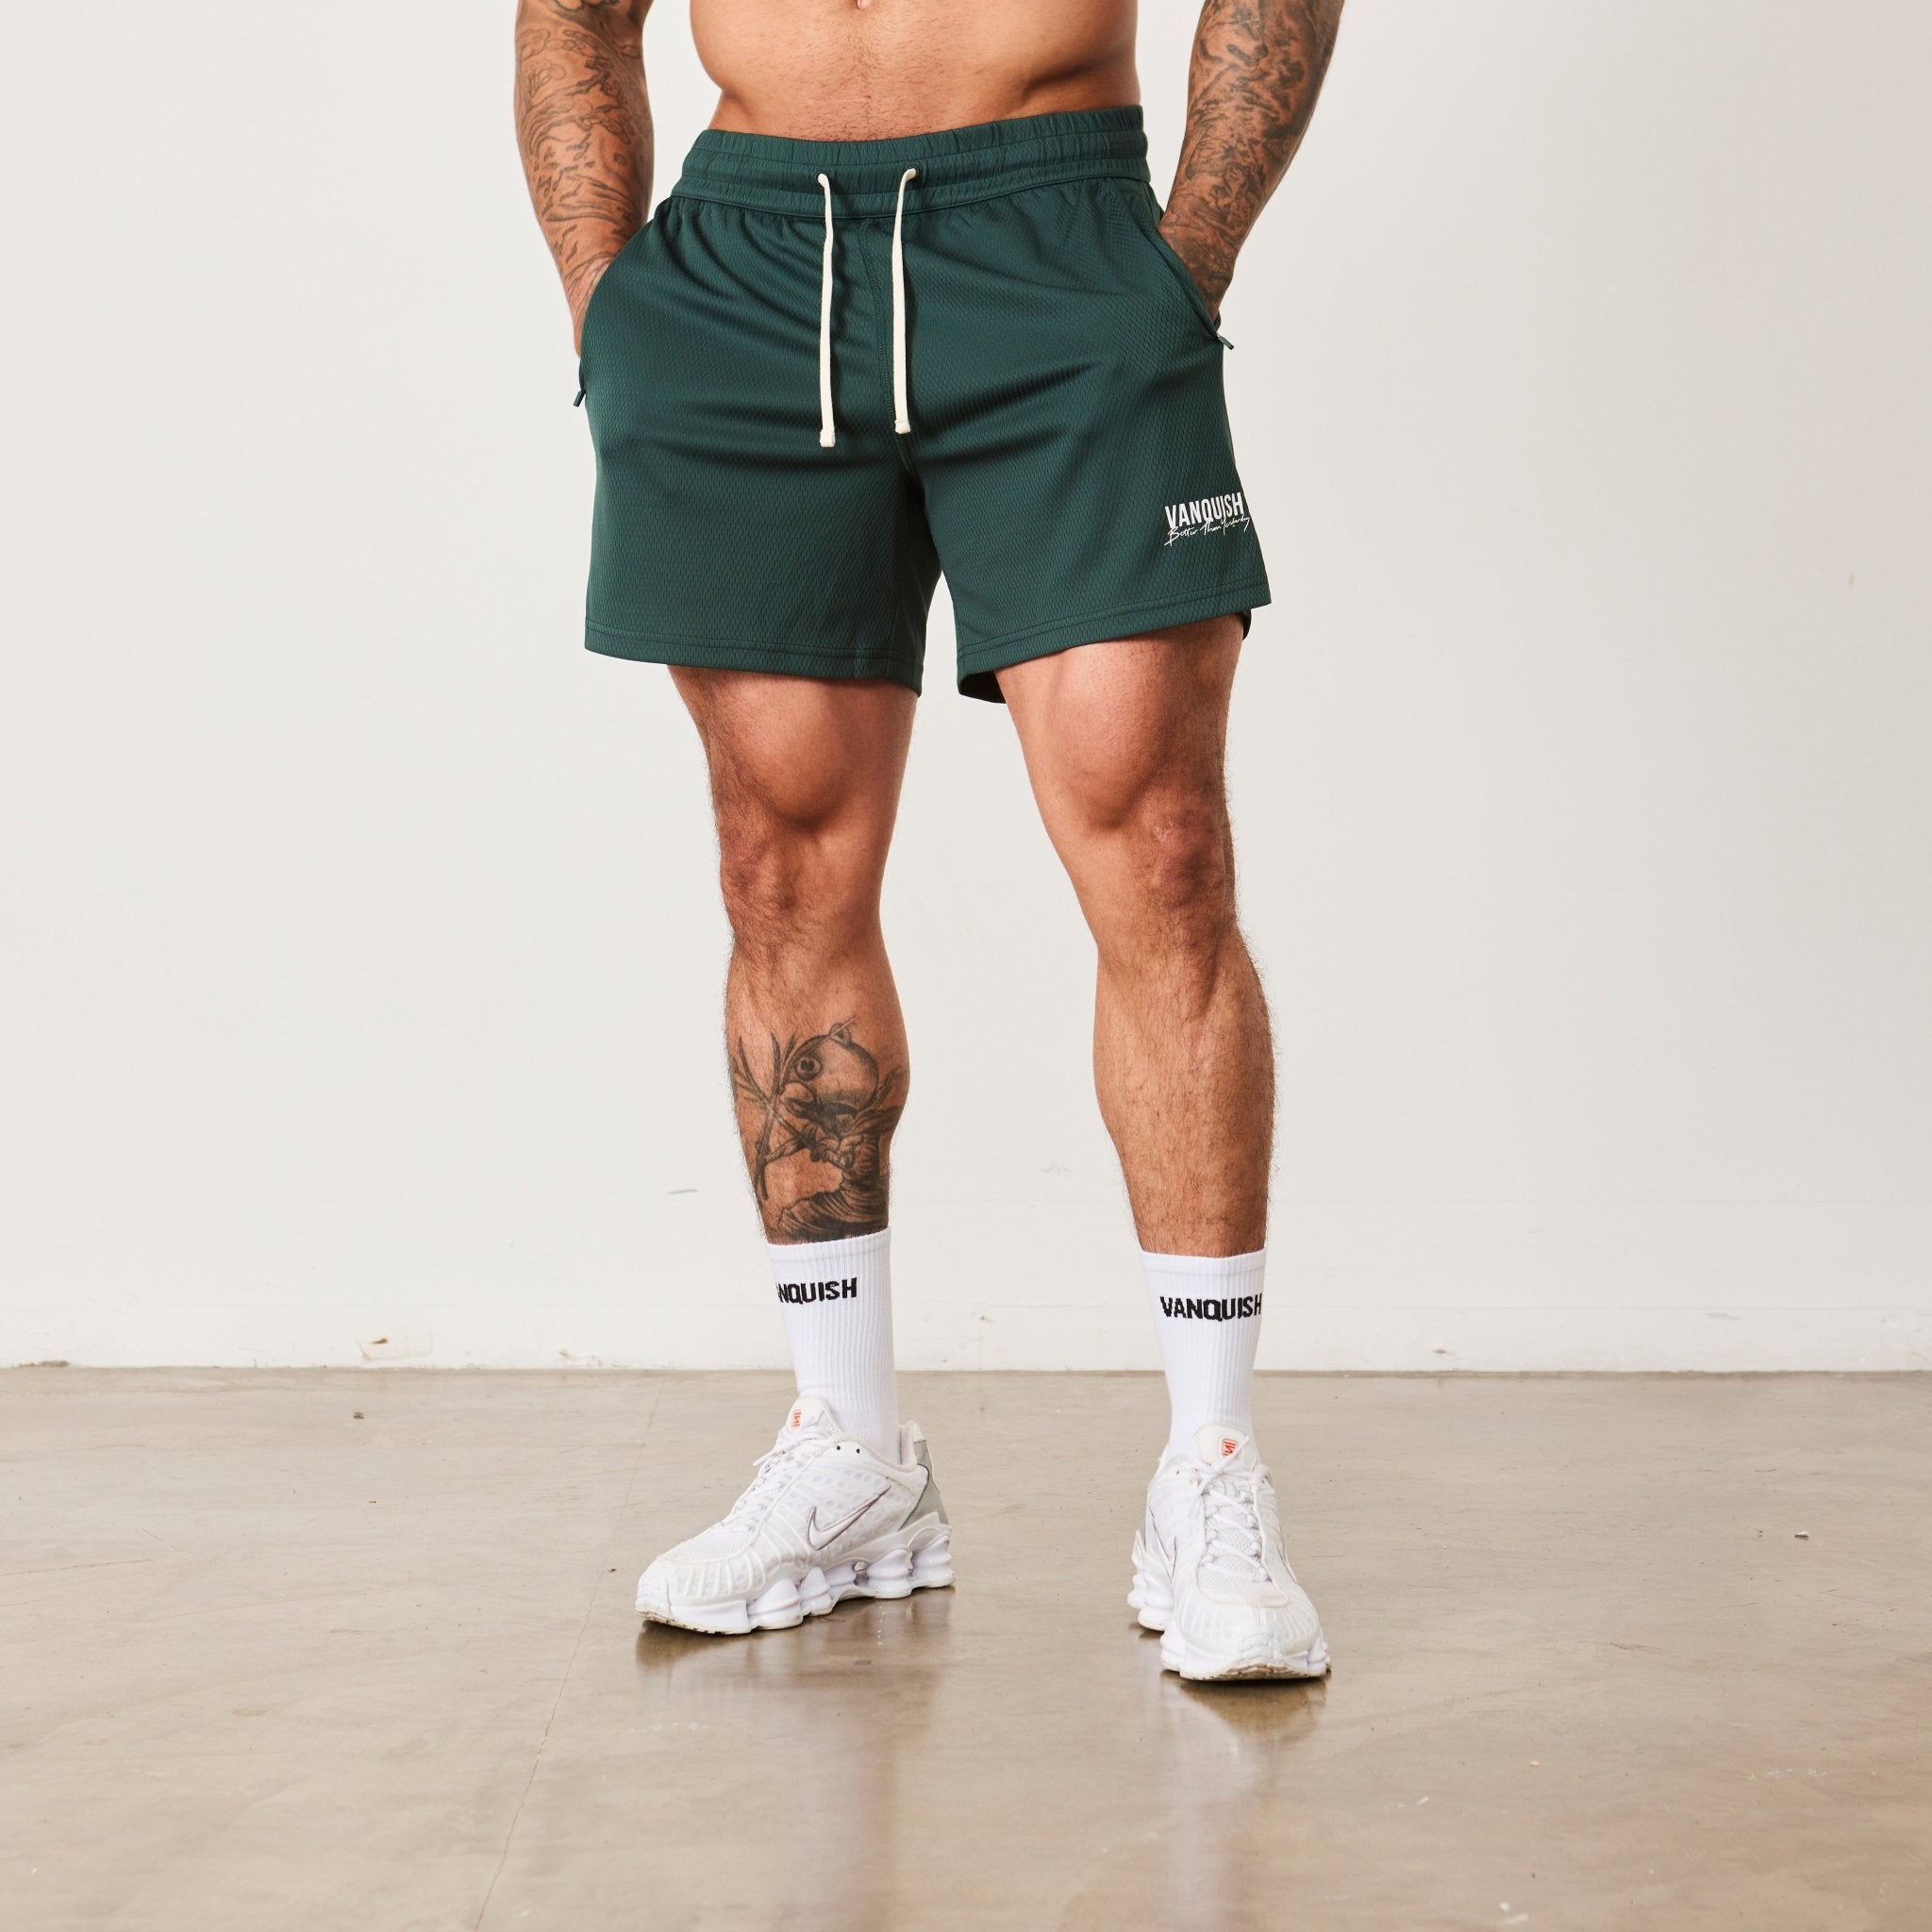 Vanquish BTY Palm Green Mesh Shorts - Vanquish Fitness